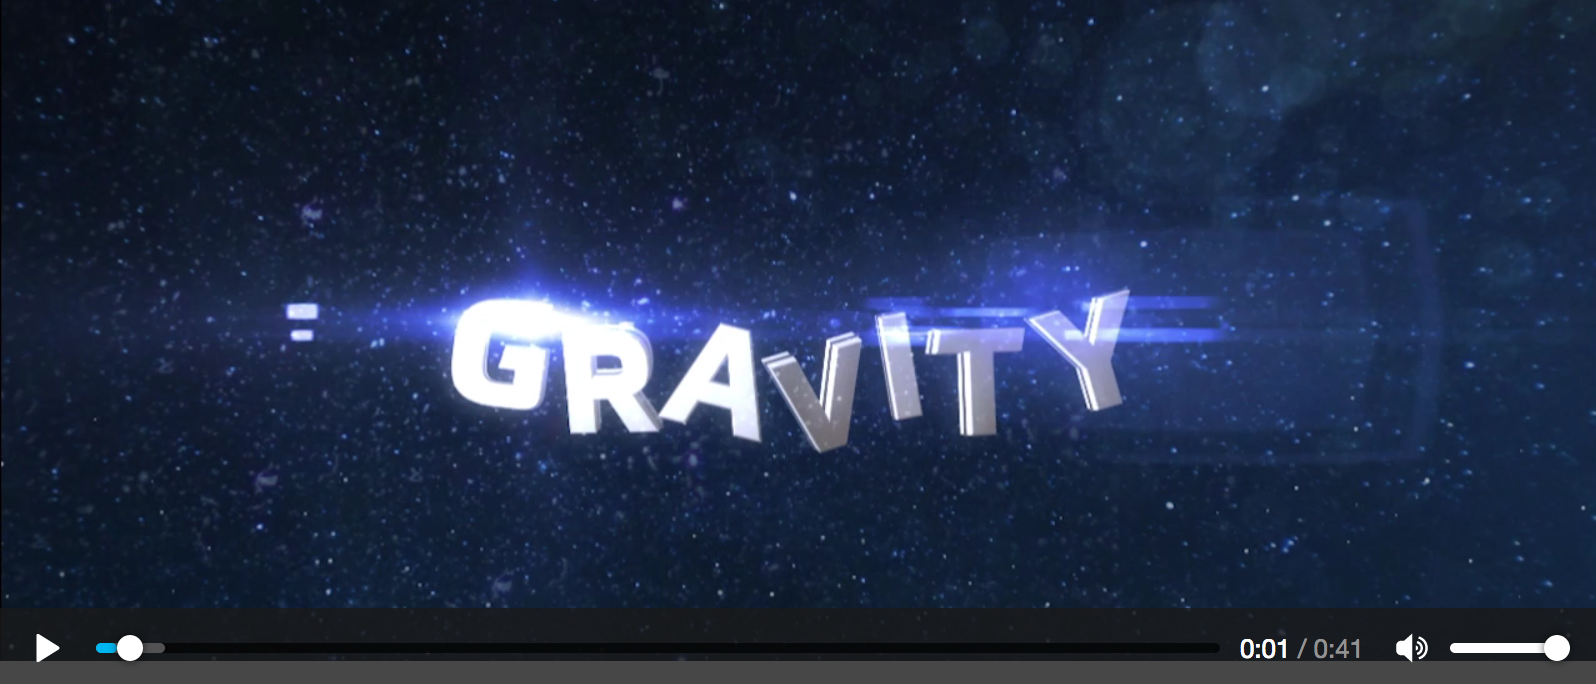 Gravity Movie